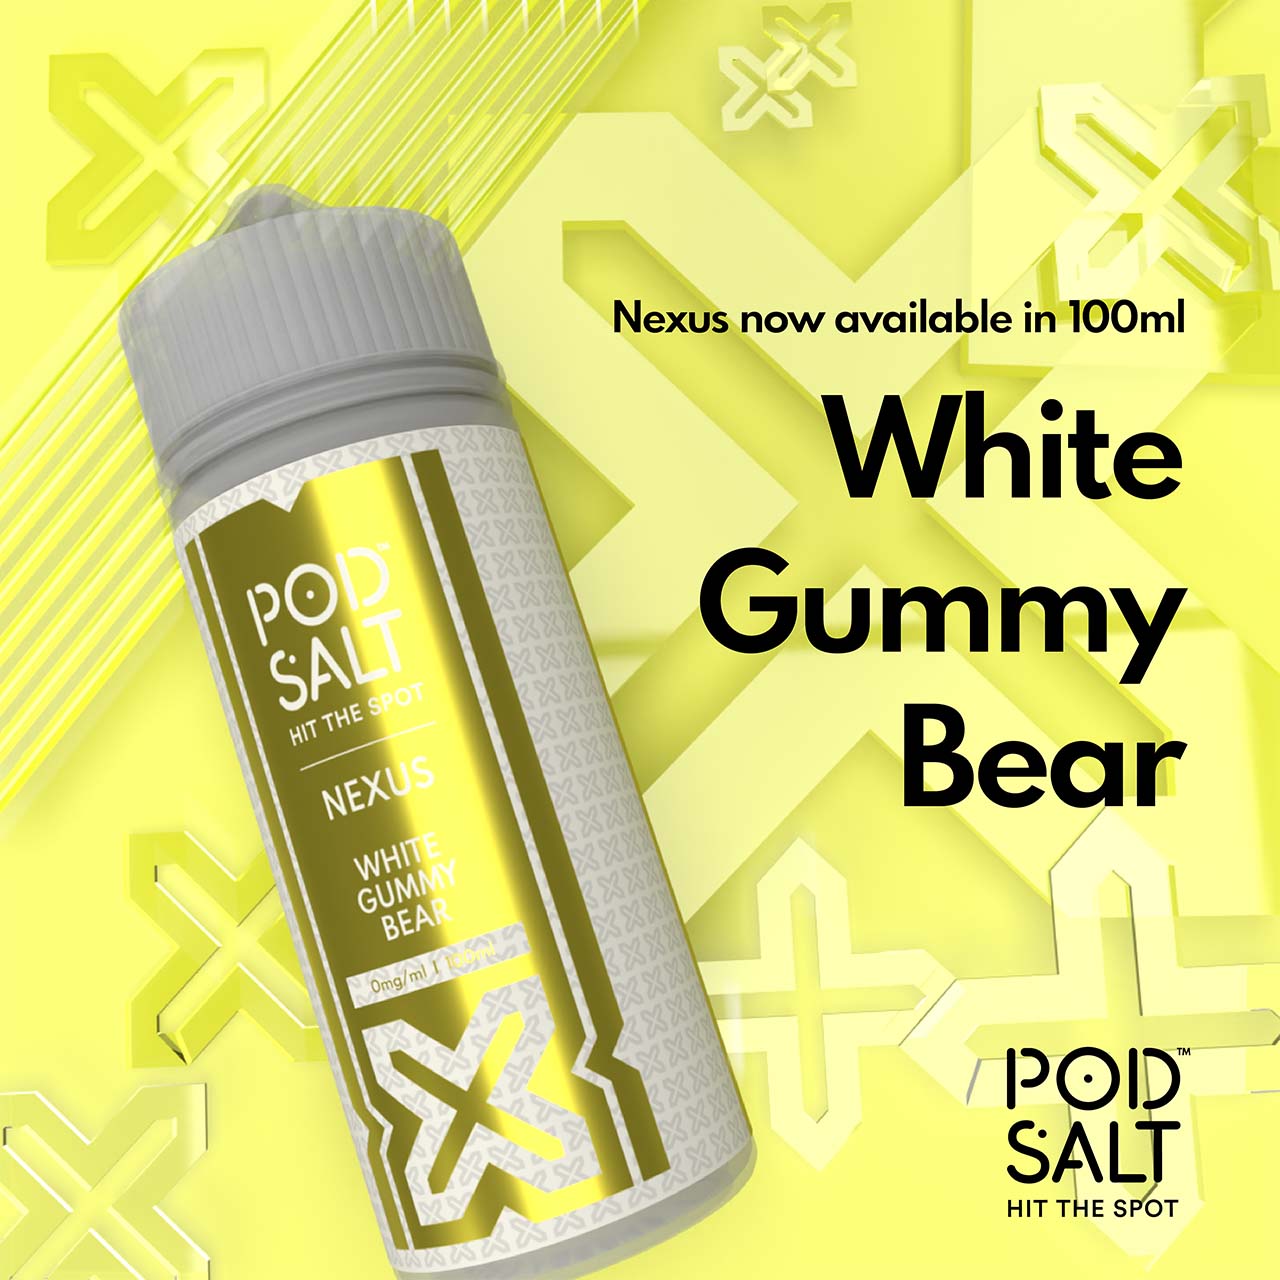 White Gummy Bear Nexus 100ml shortfill (Image)